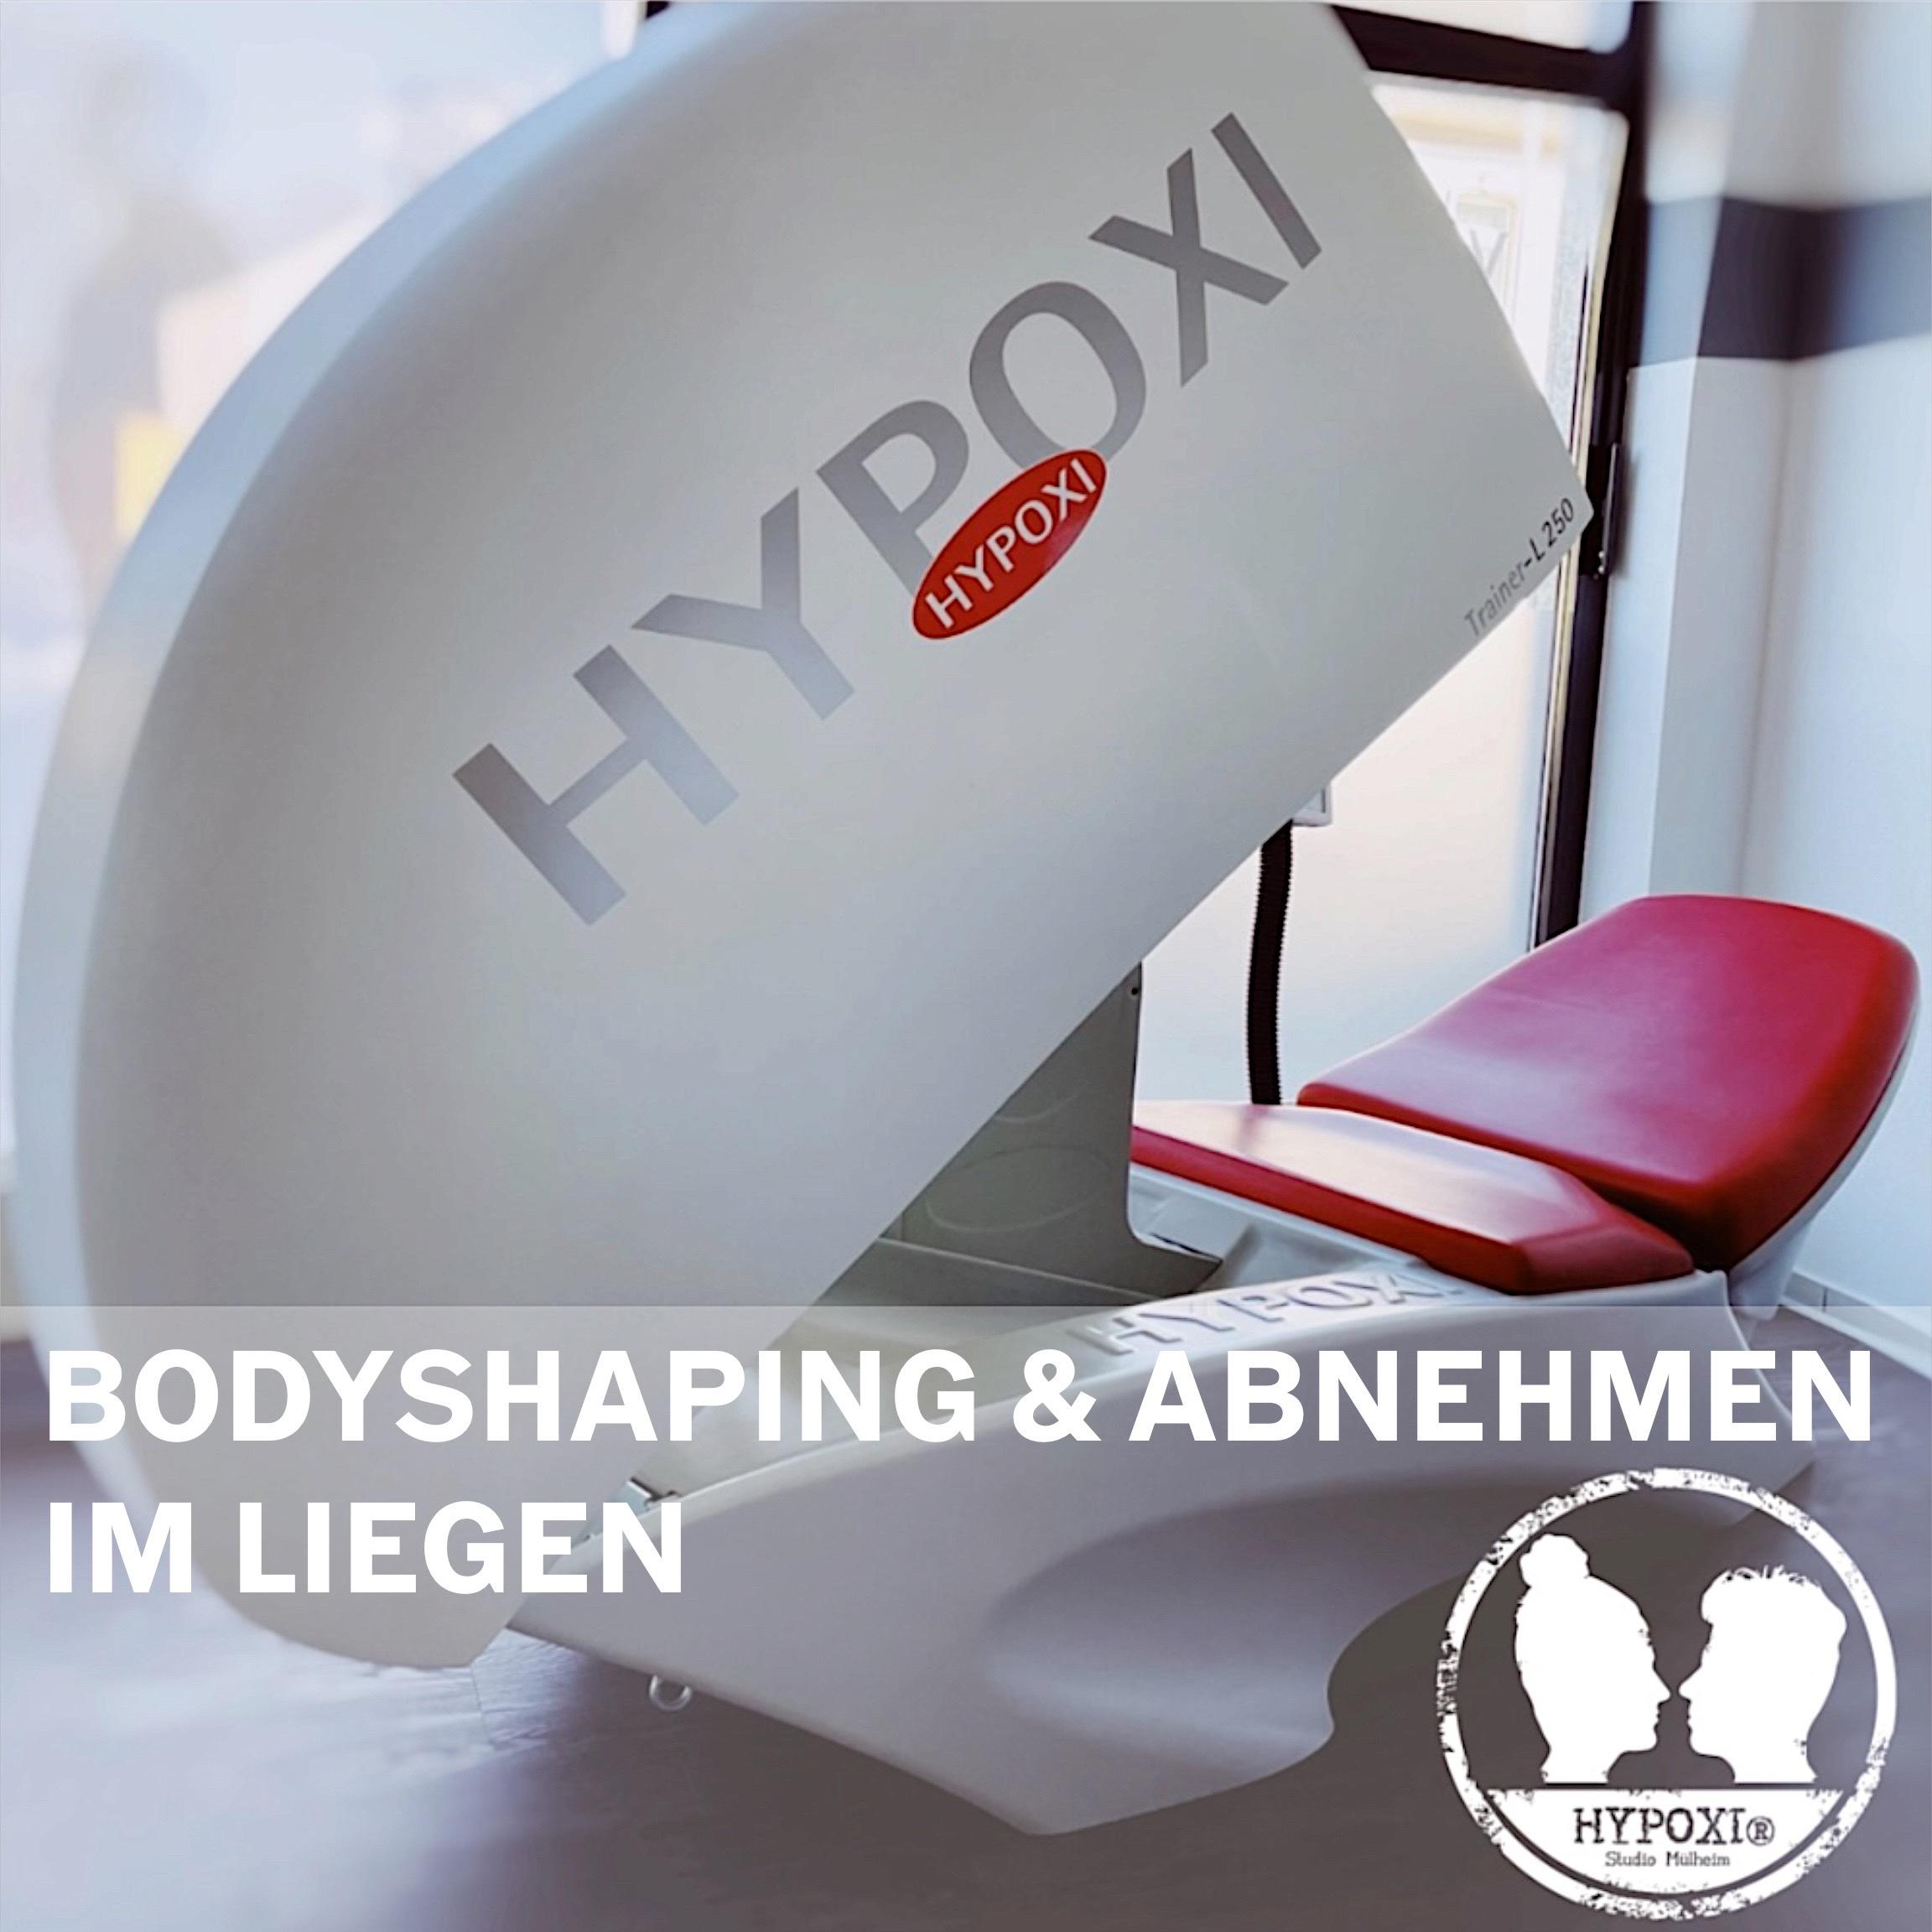 Bilder HYPOXI-Studio Mülheim • Bodyforming & Wellness GmbH